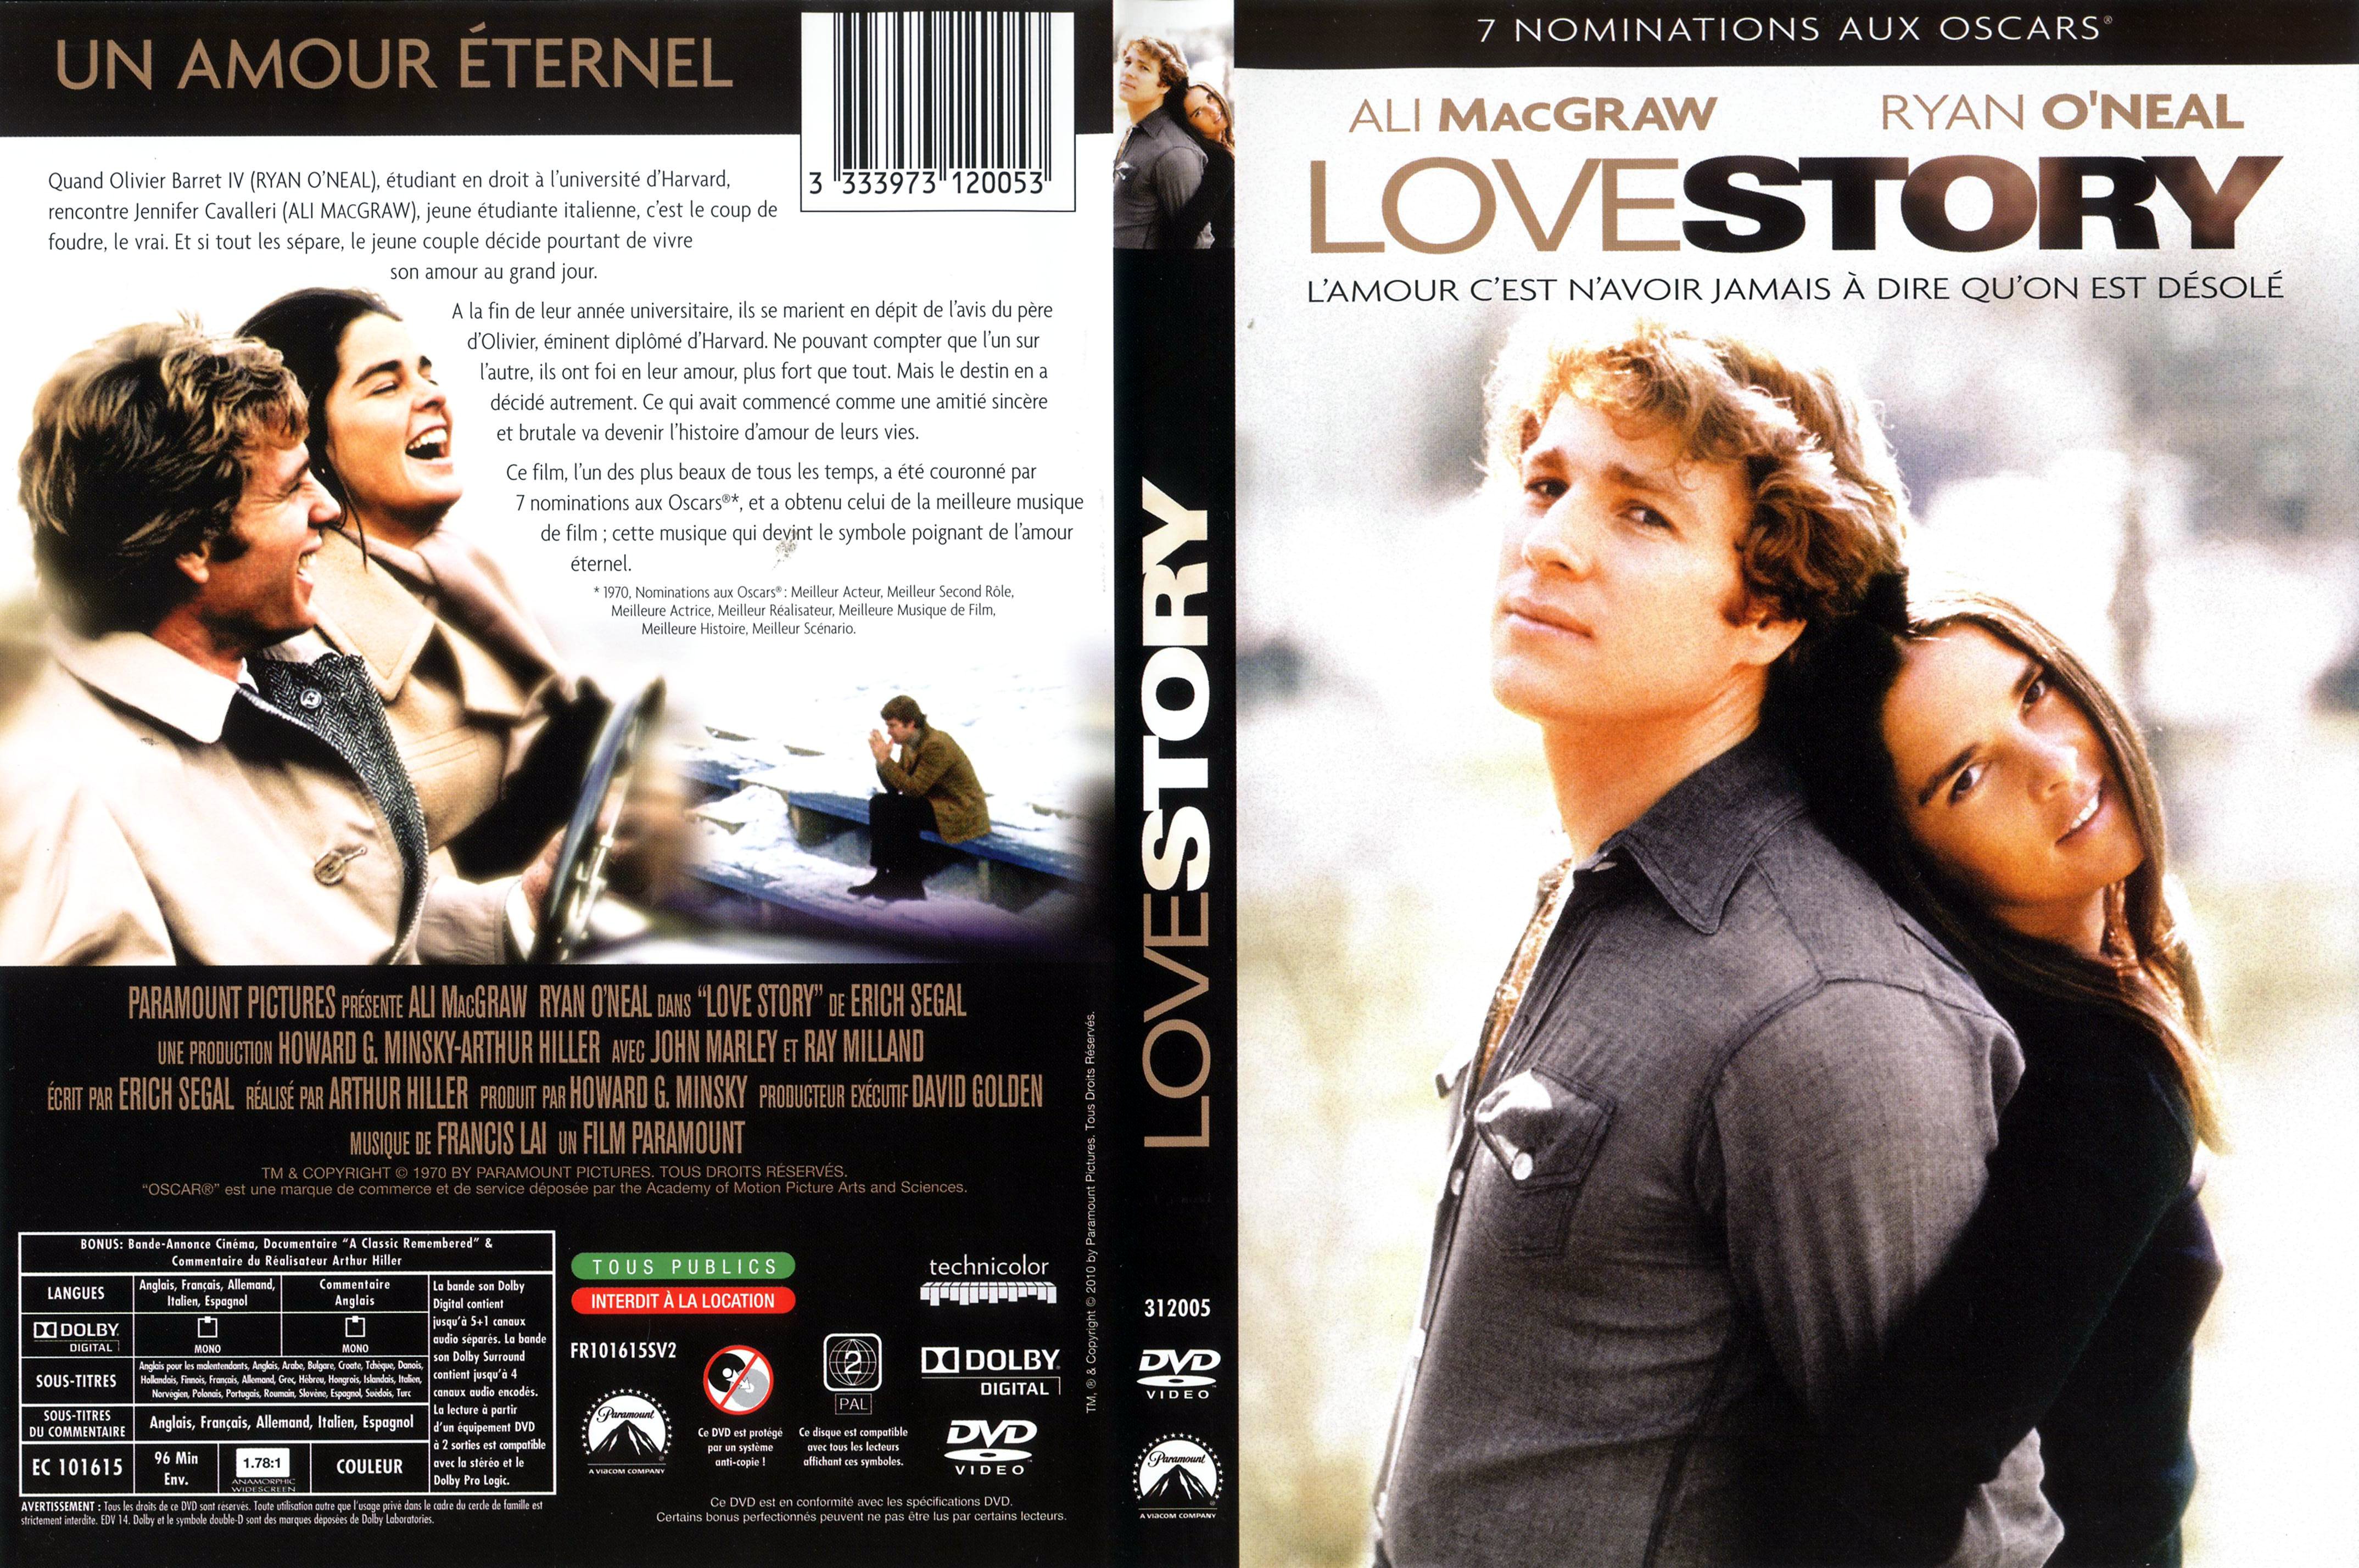 Jaquette DVD Love story v3